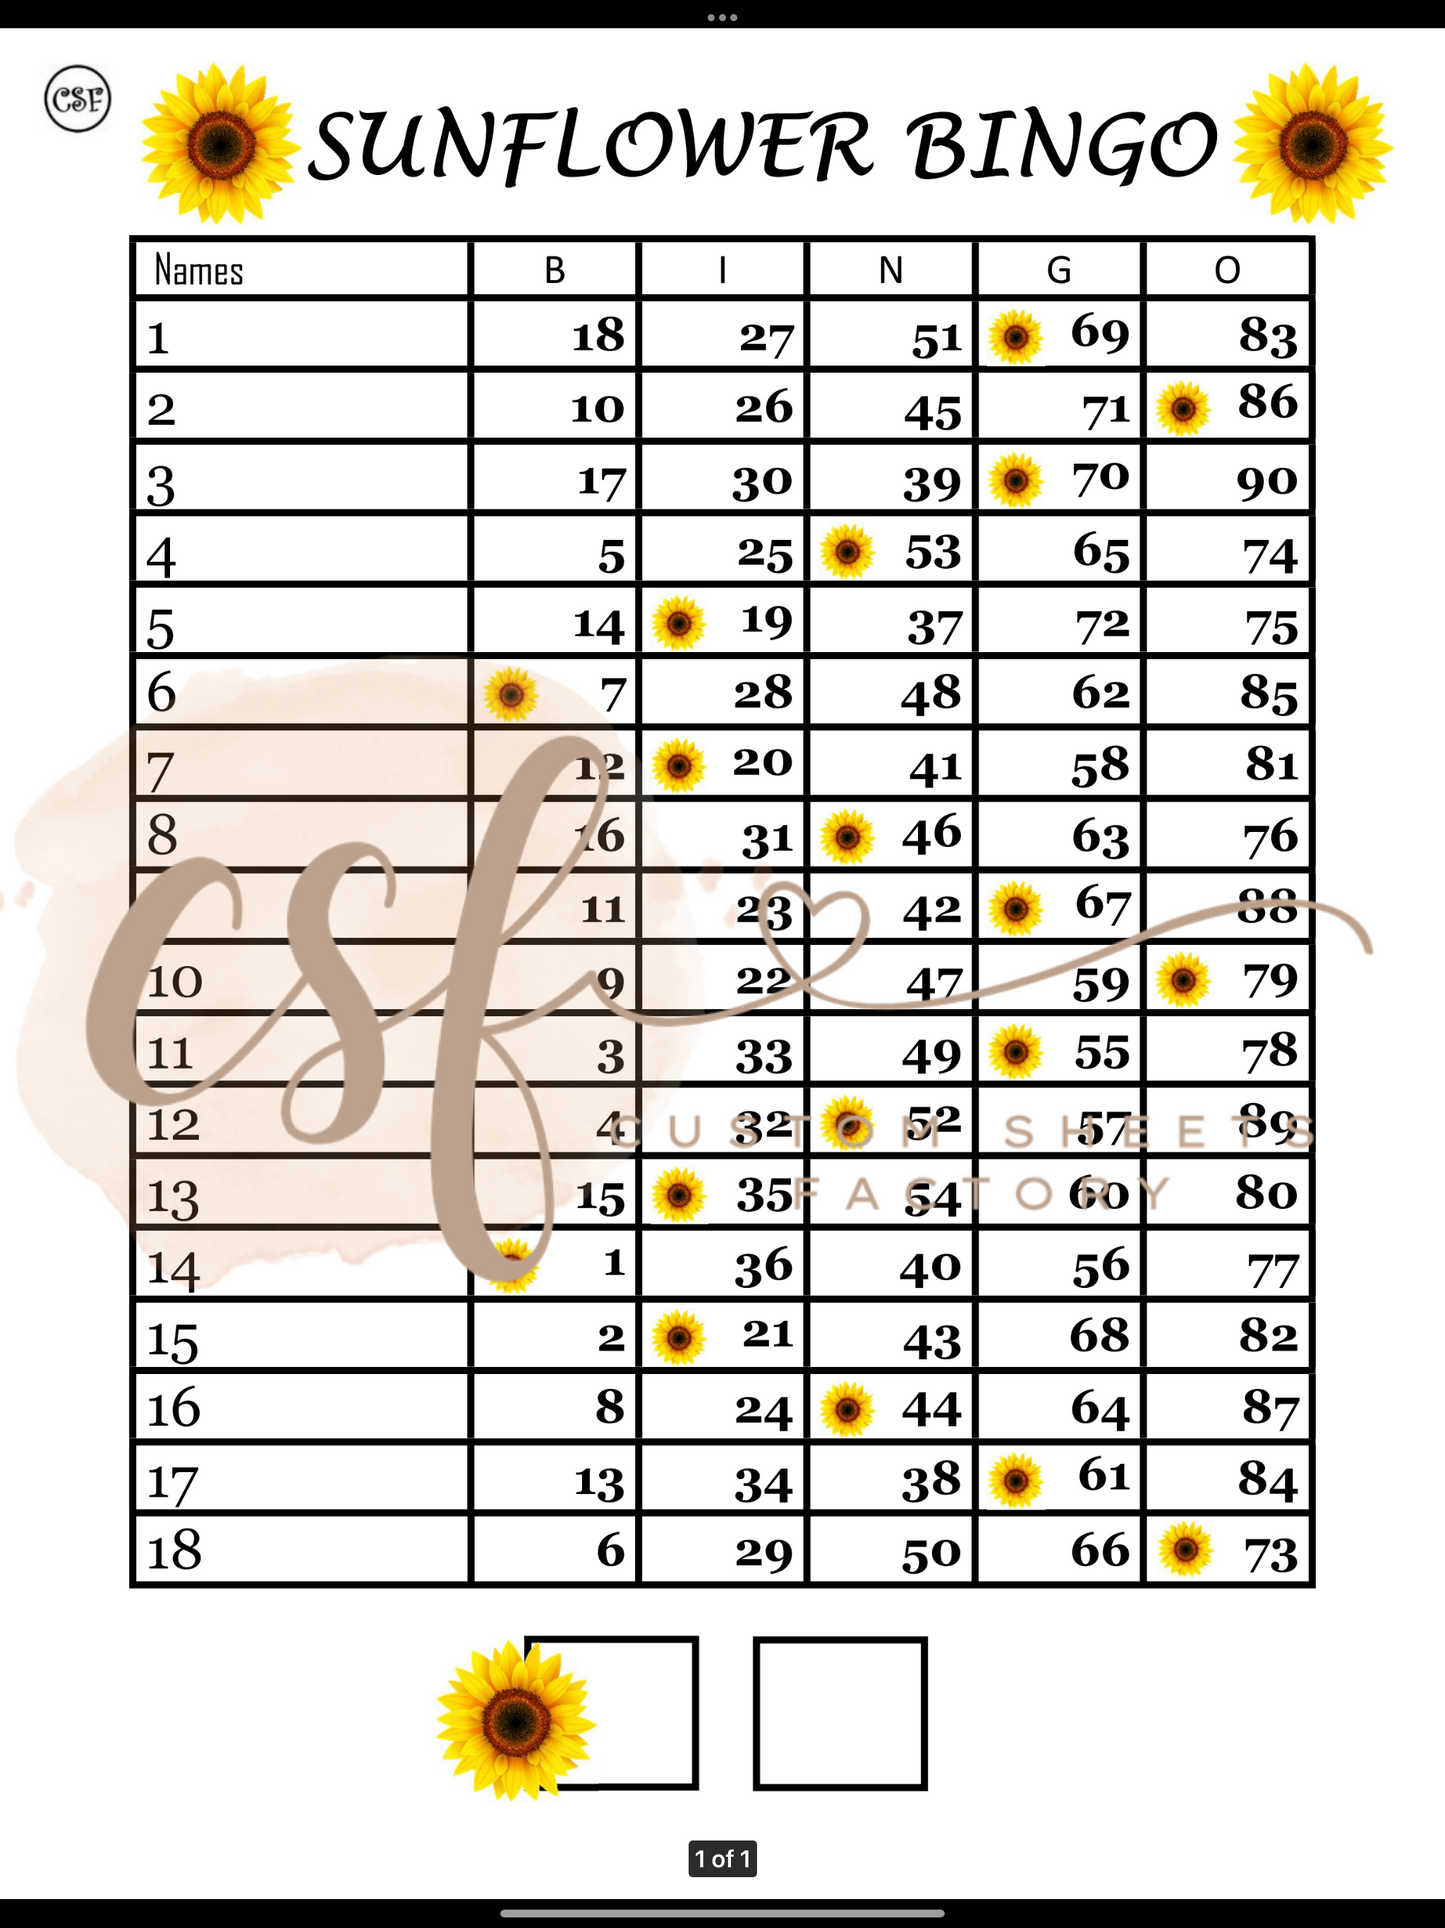 Sunflower Bingo - 18 line - 90 ball